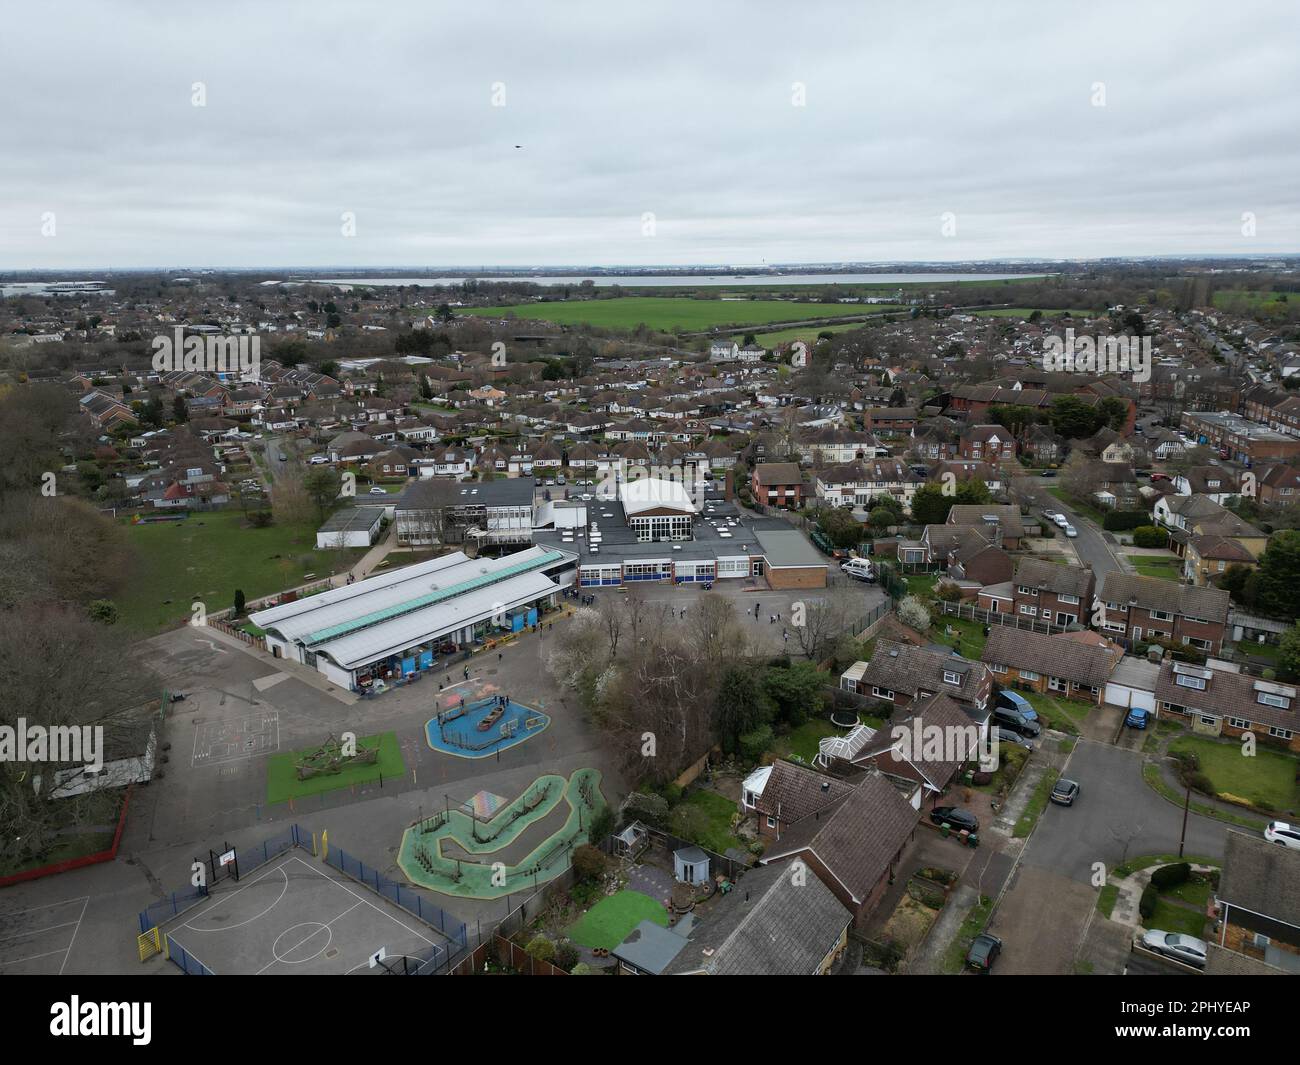 St Nicholas Primary School, Shepperton Surrey UK drone aerial view Stock Photo